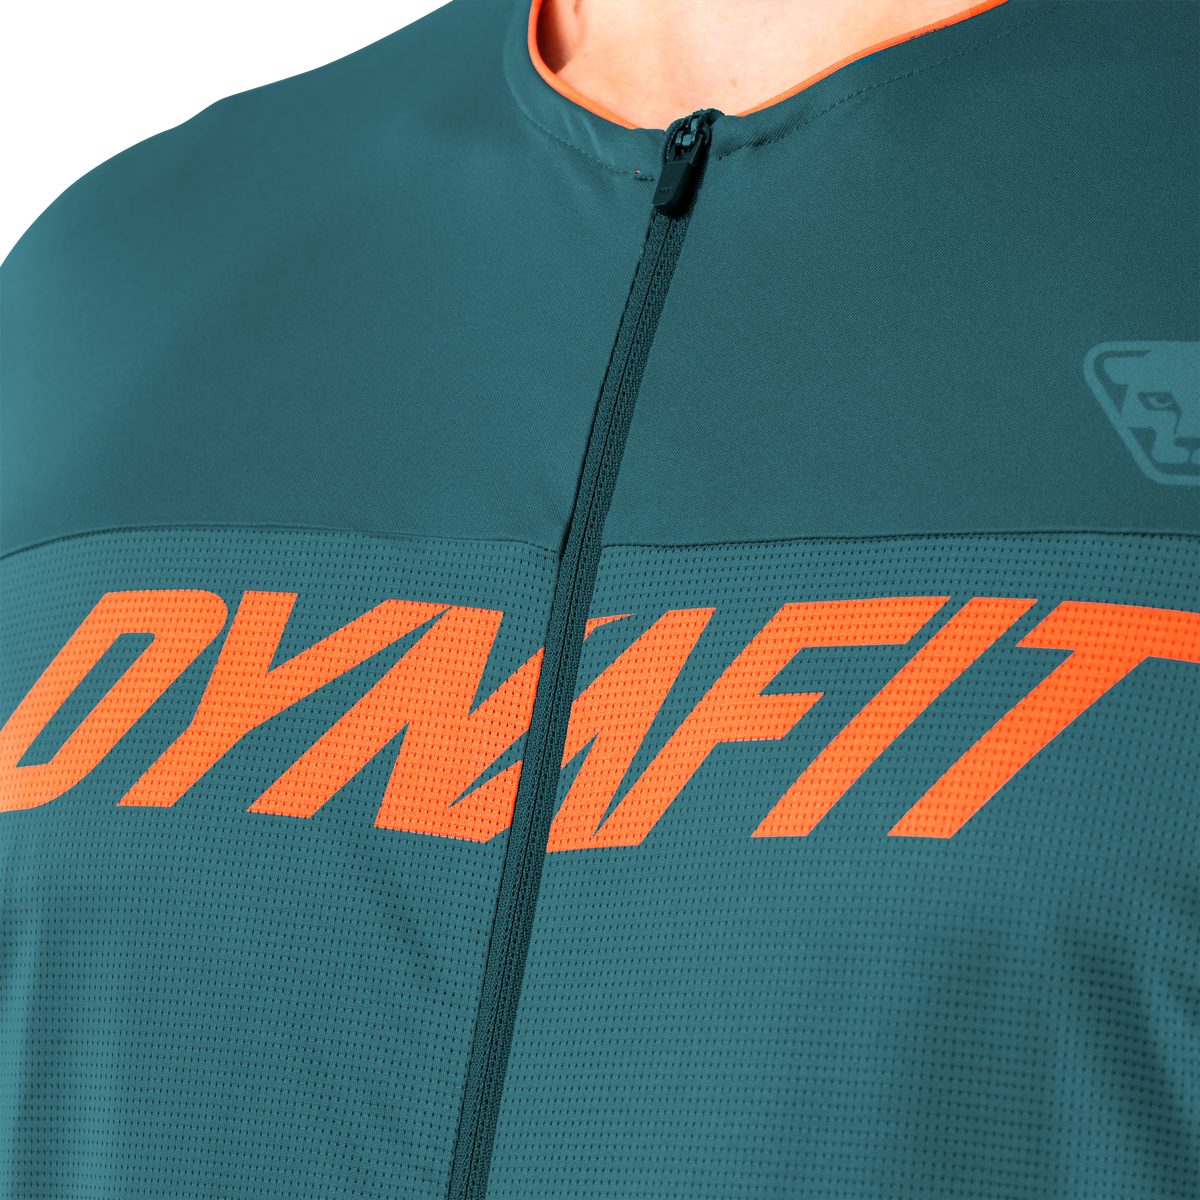 DynaFit (Radtrikot) Dynafit Full RIDE Shirt Zip T-Shirt - Herren LIGHT